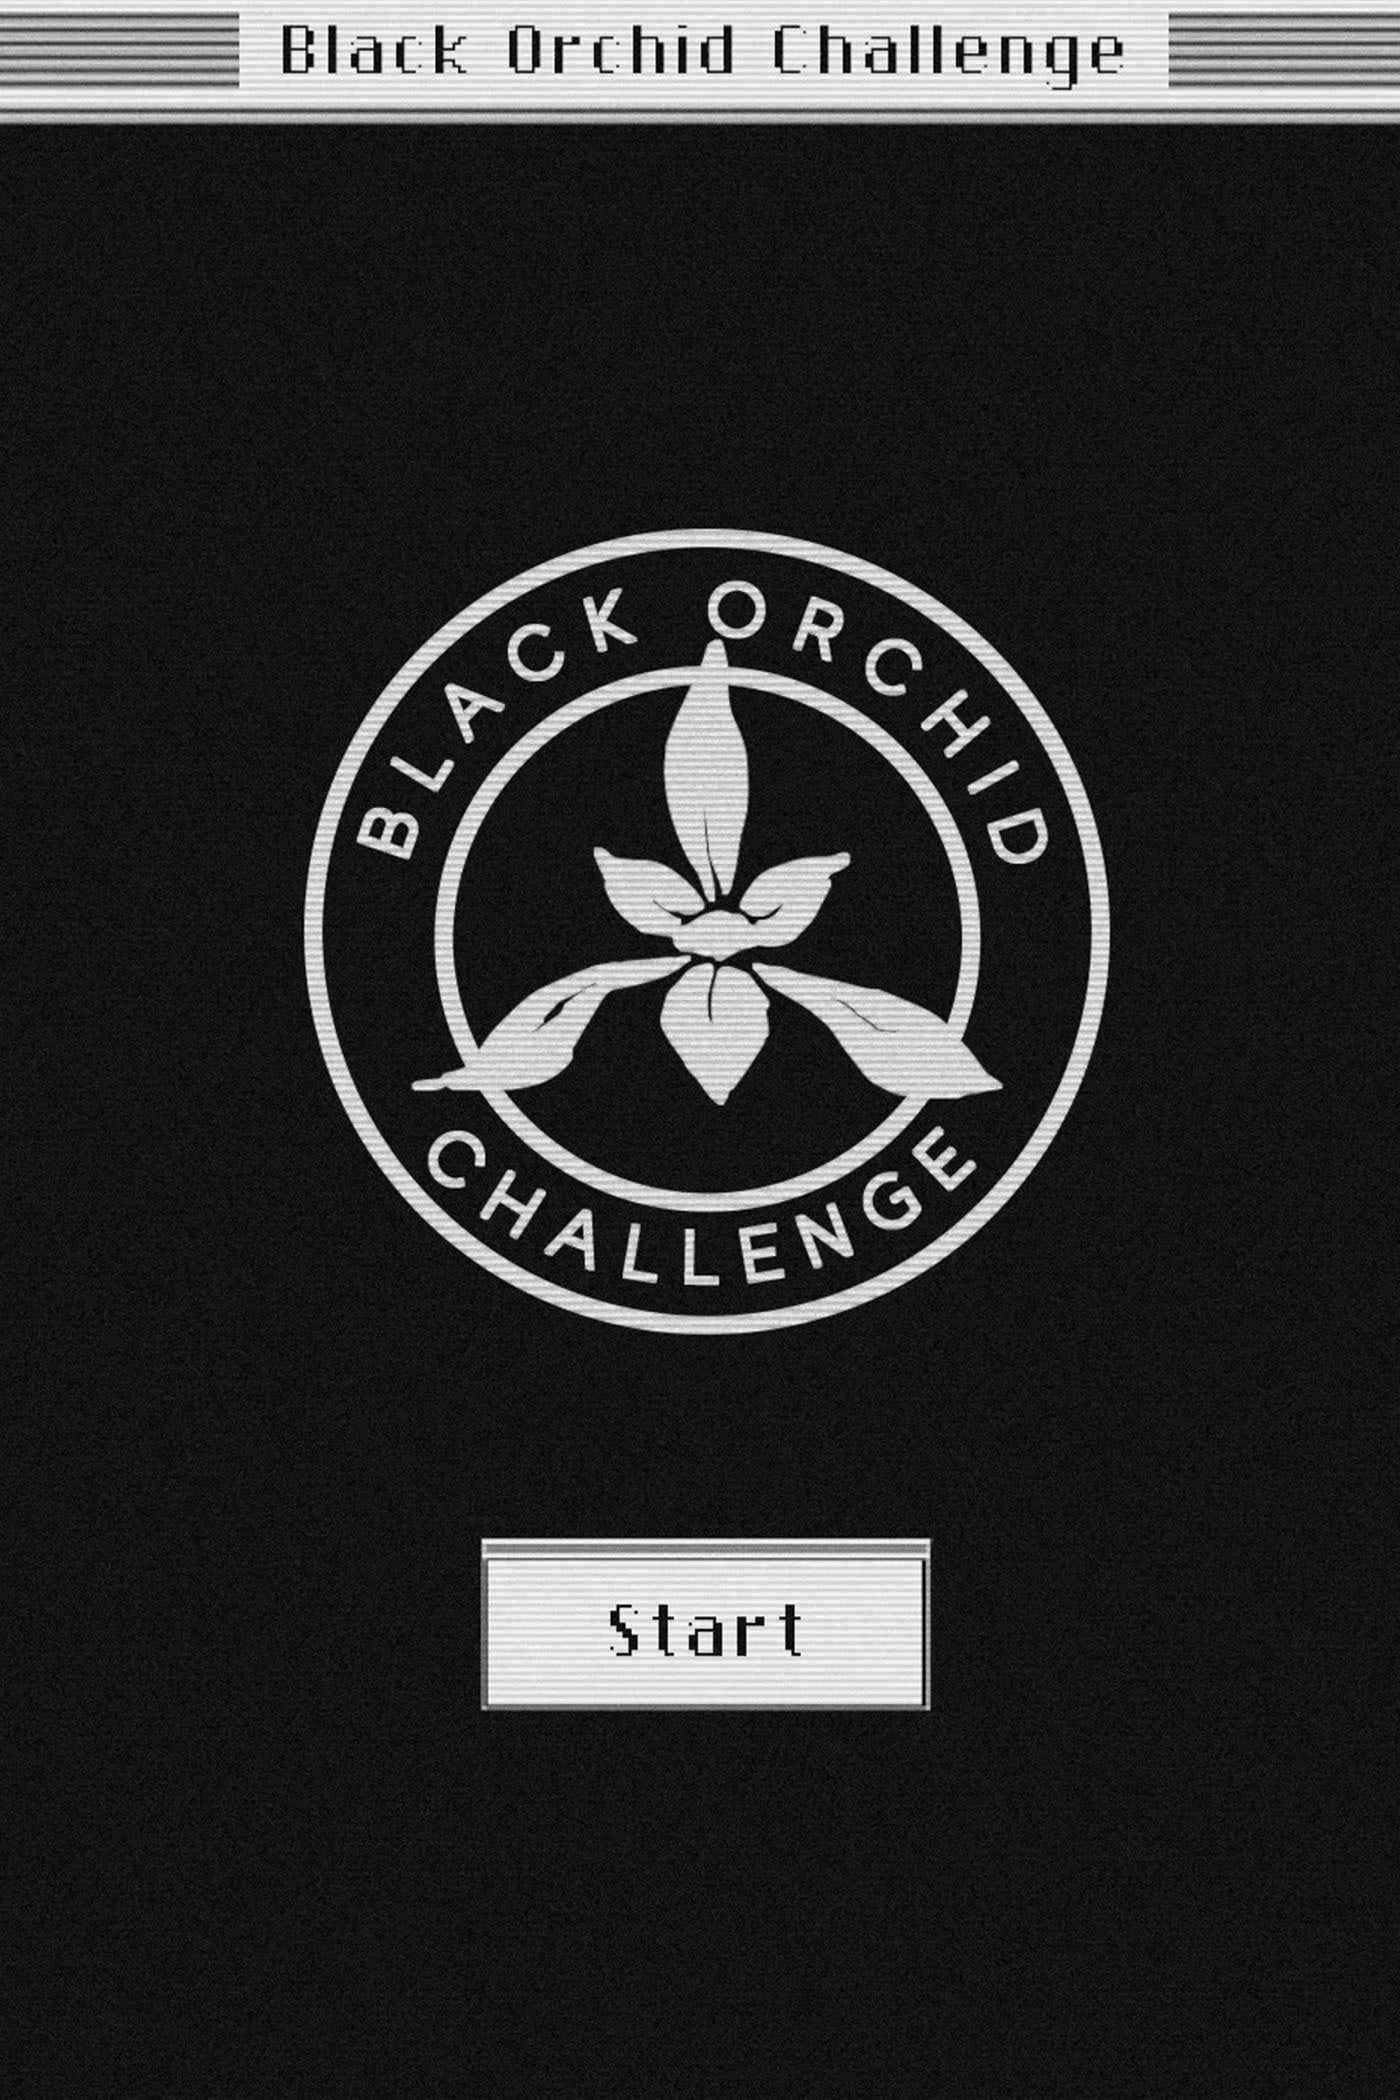 Black Orchid Challenge